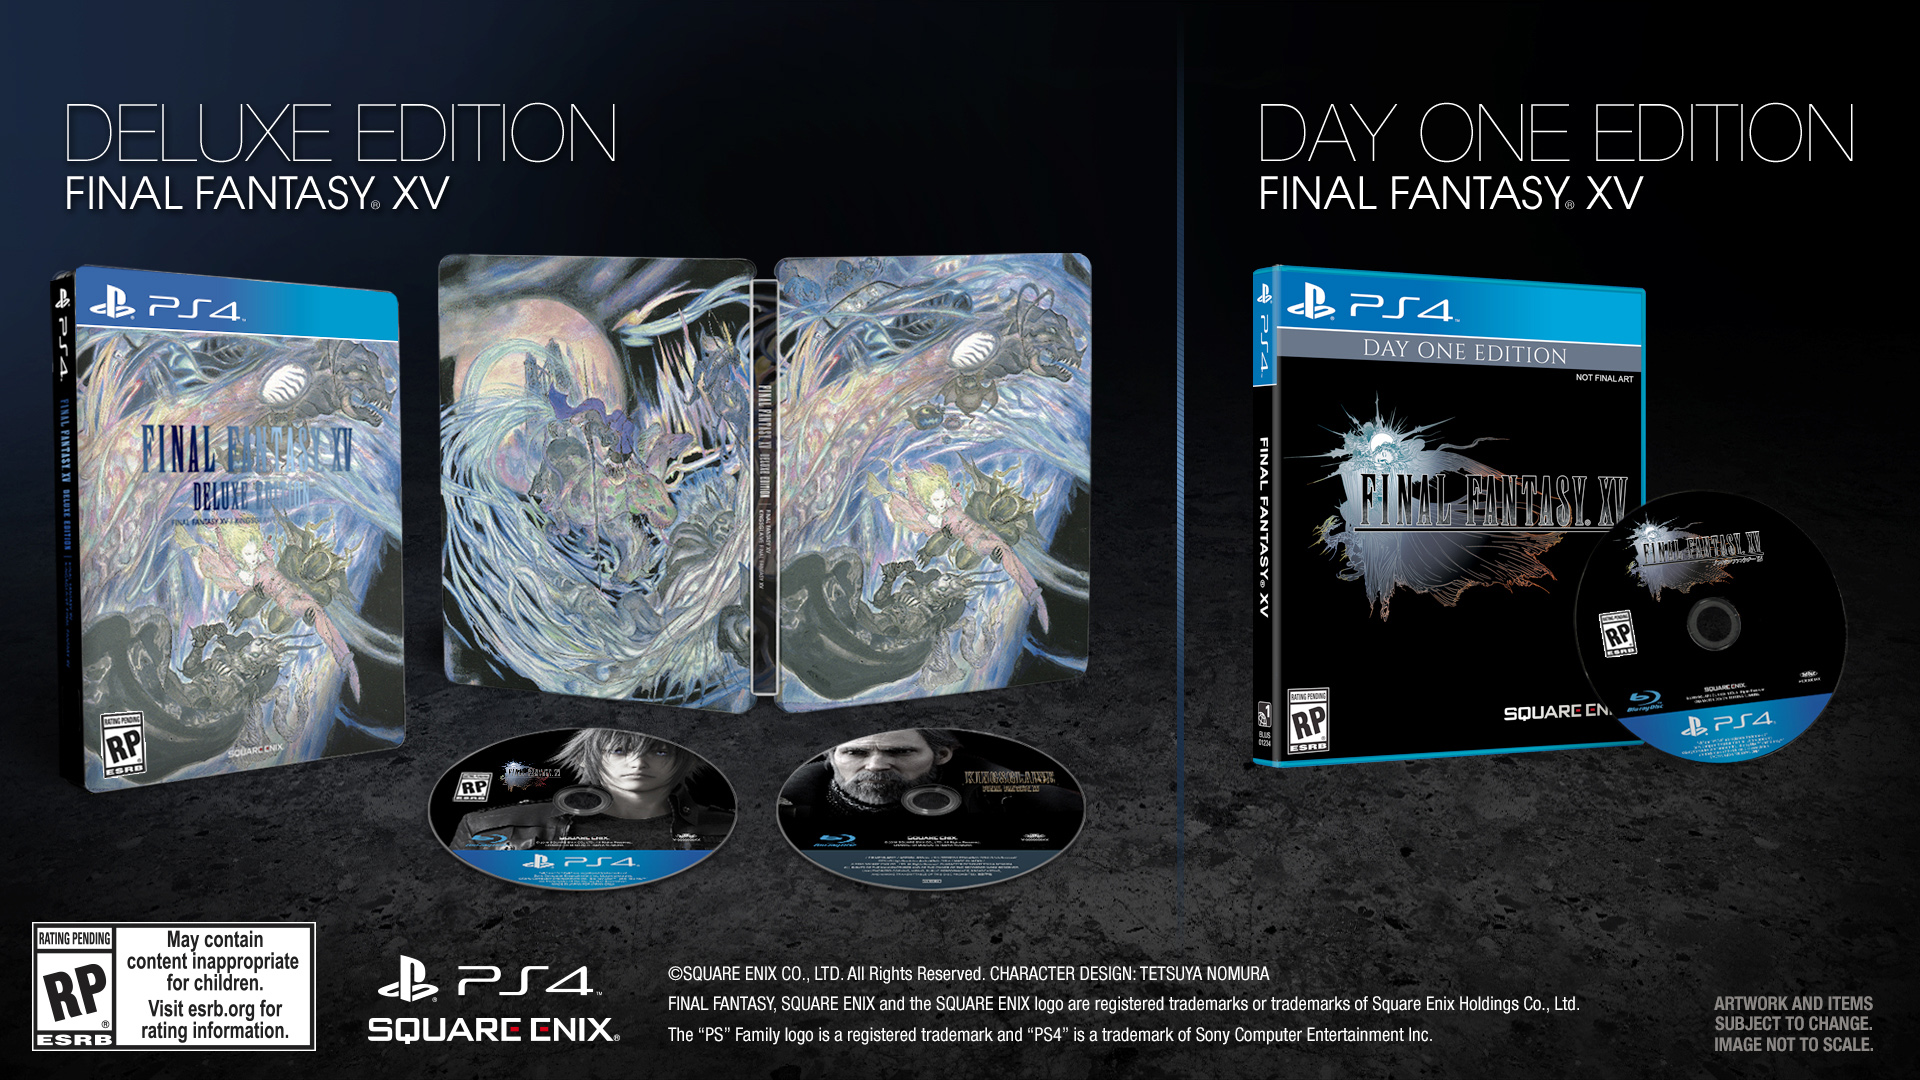 Final fantasy rebirth deluxe edition. Final Fantasy 15 коллекционное издание. Ps4 игра Square Enix Final Fantasy XV. Day one Edition. Final Fantasy ps4. Final Fantasy XV Deluxe Edition.